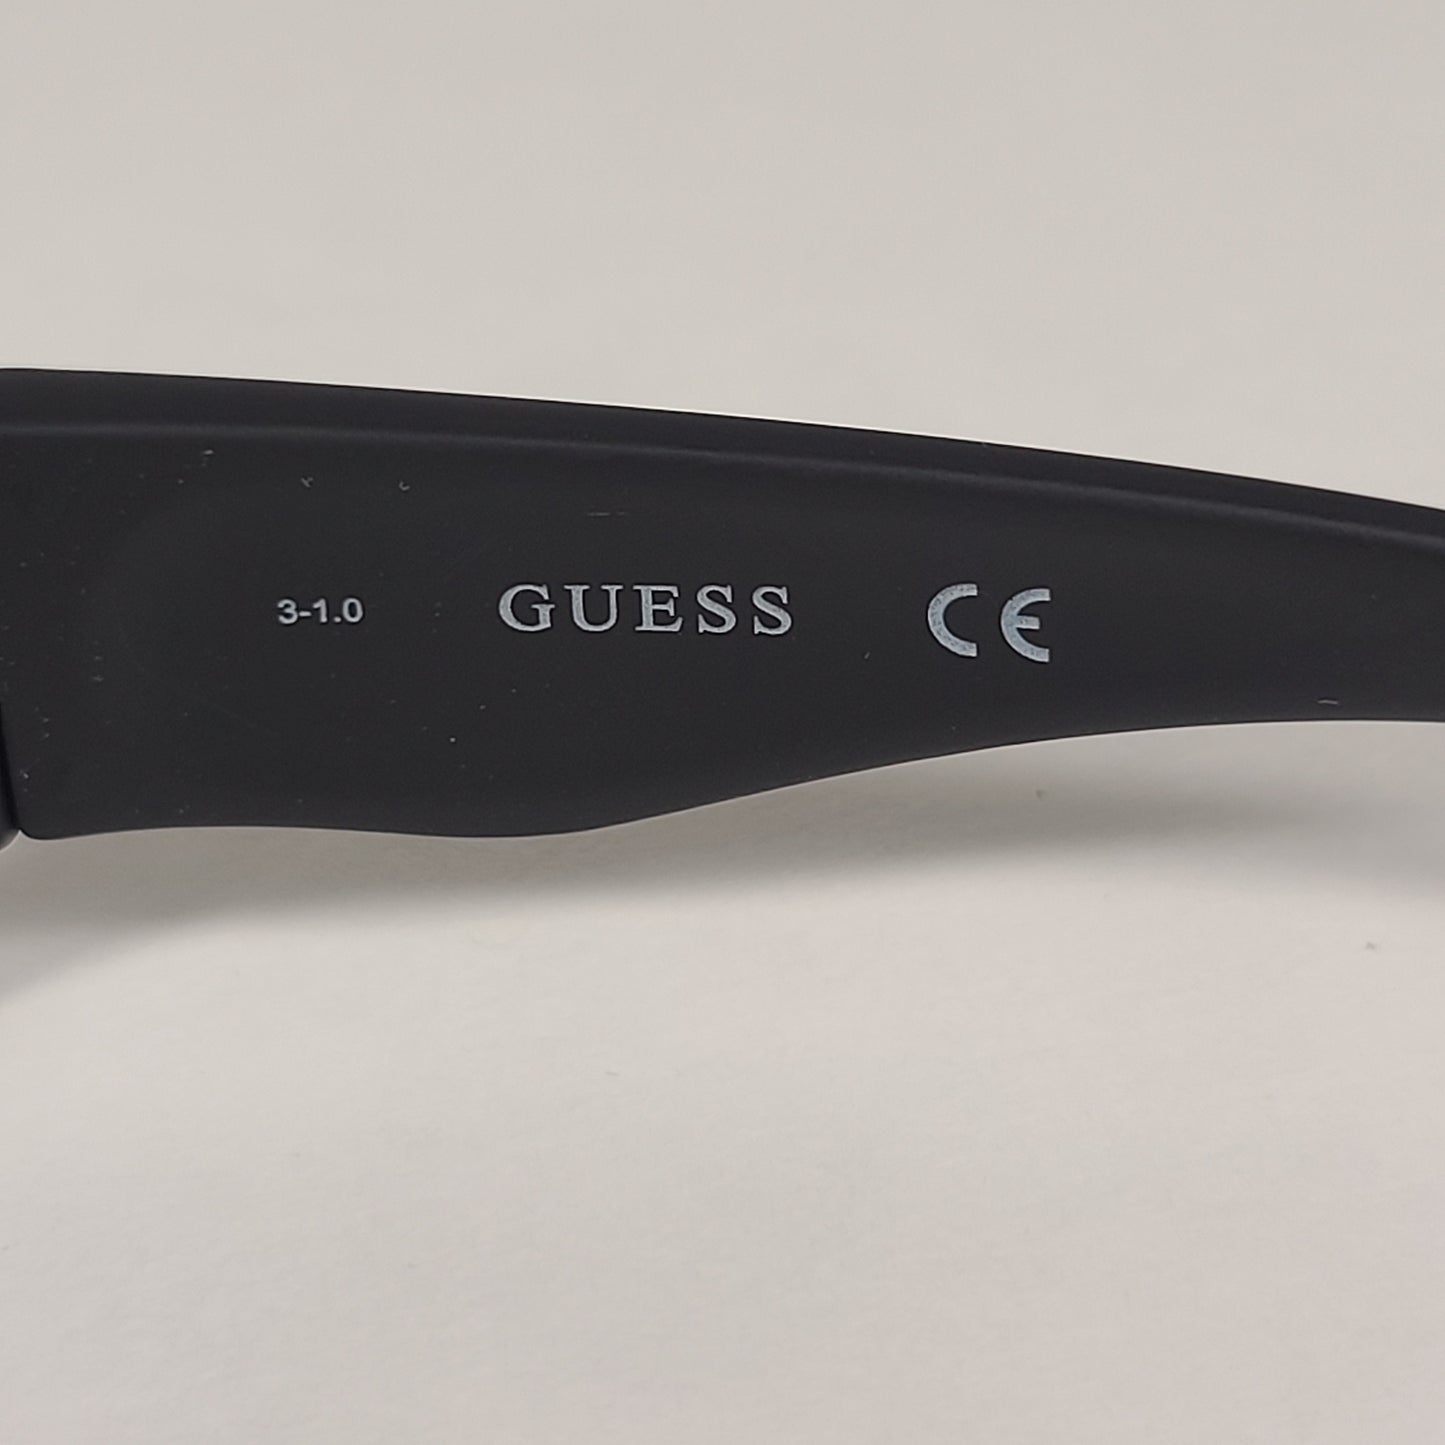 Guess Small Wrap Sunglasses Matte Black Frame Gray Lens GF4010 02A - Sunglasses